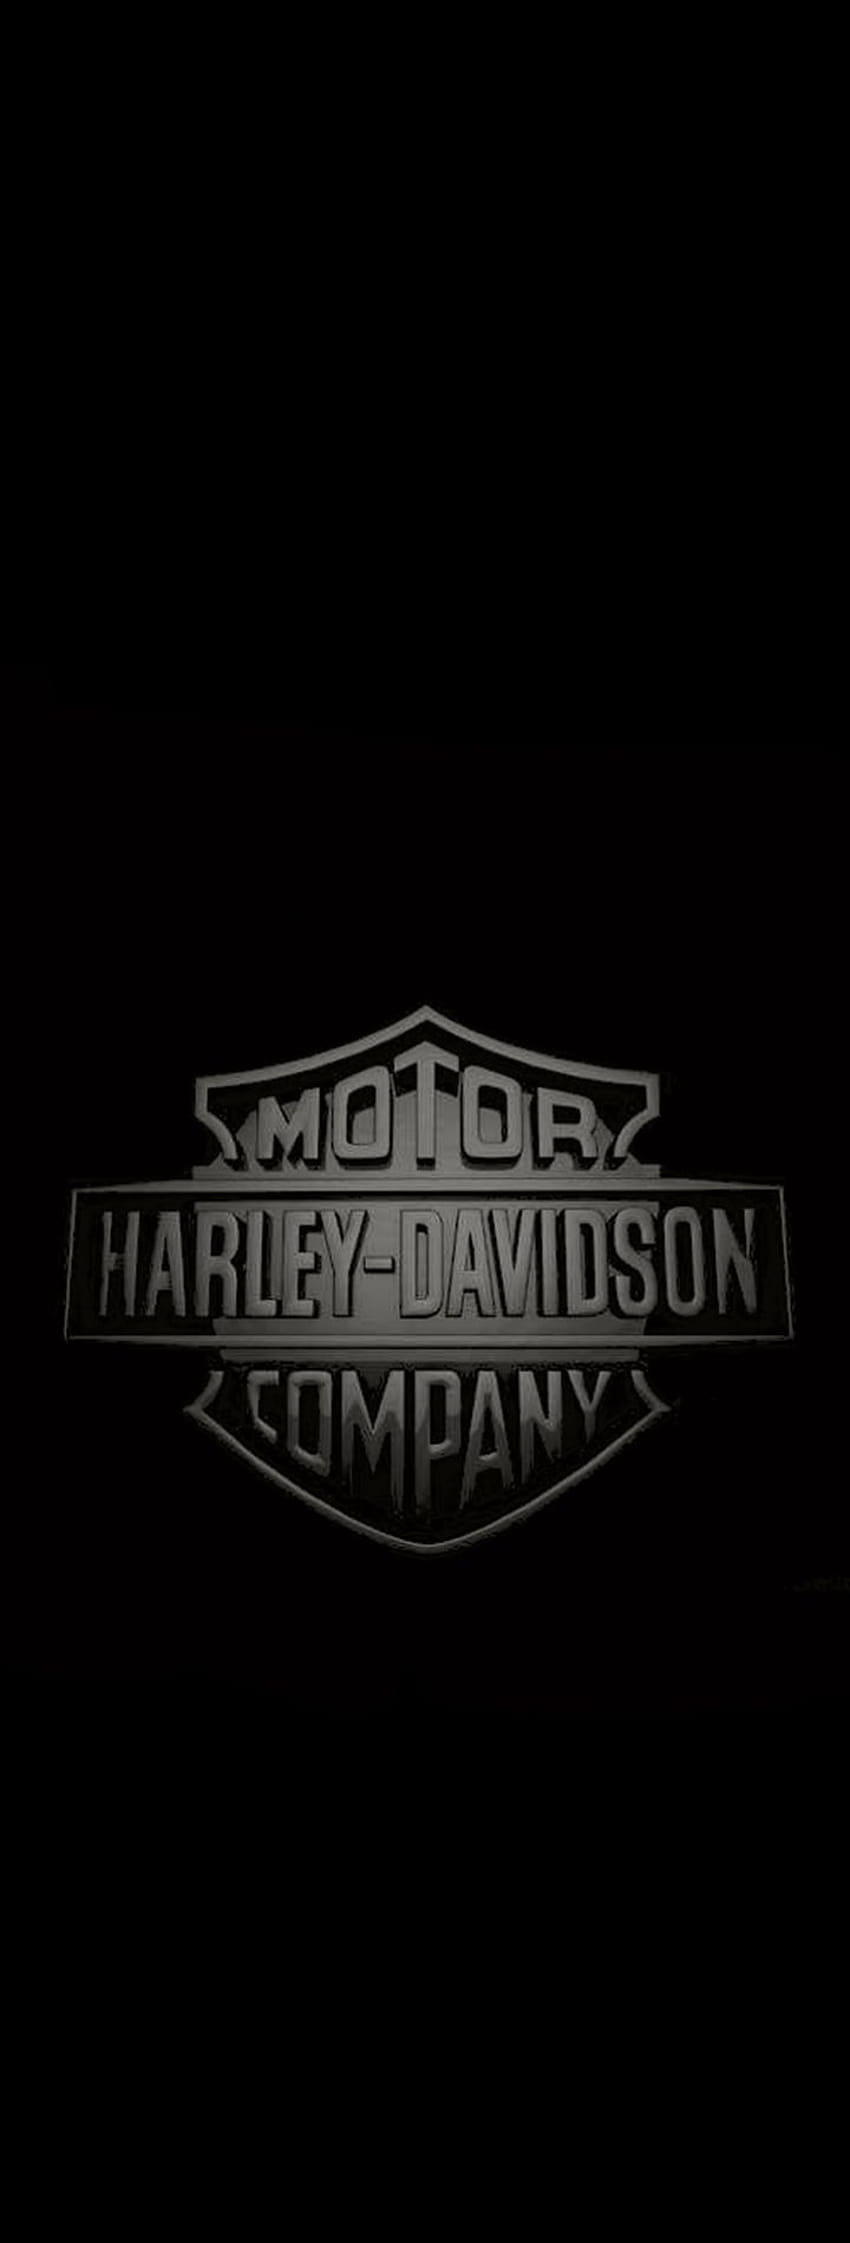 Harley Telefon, harley davidson iphone HD telefon duvar kağıdı